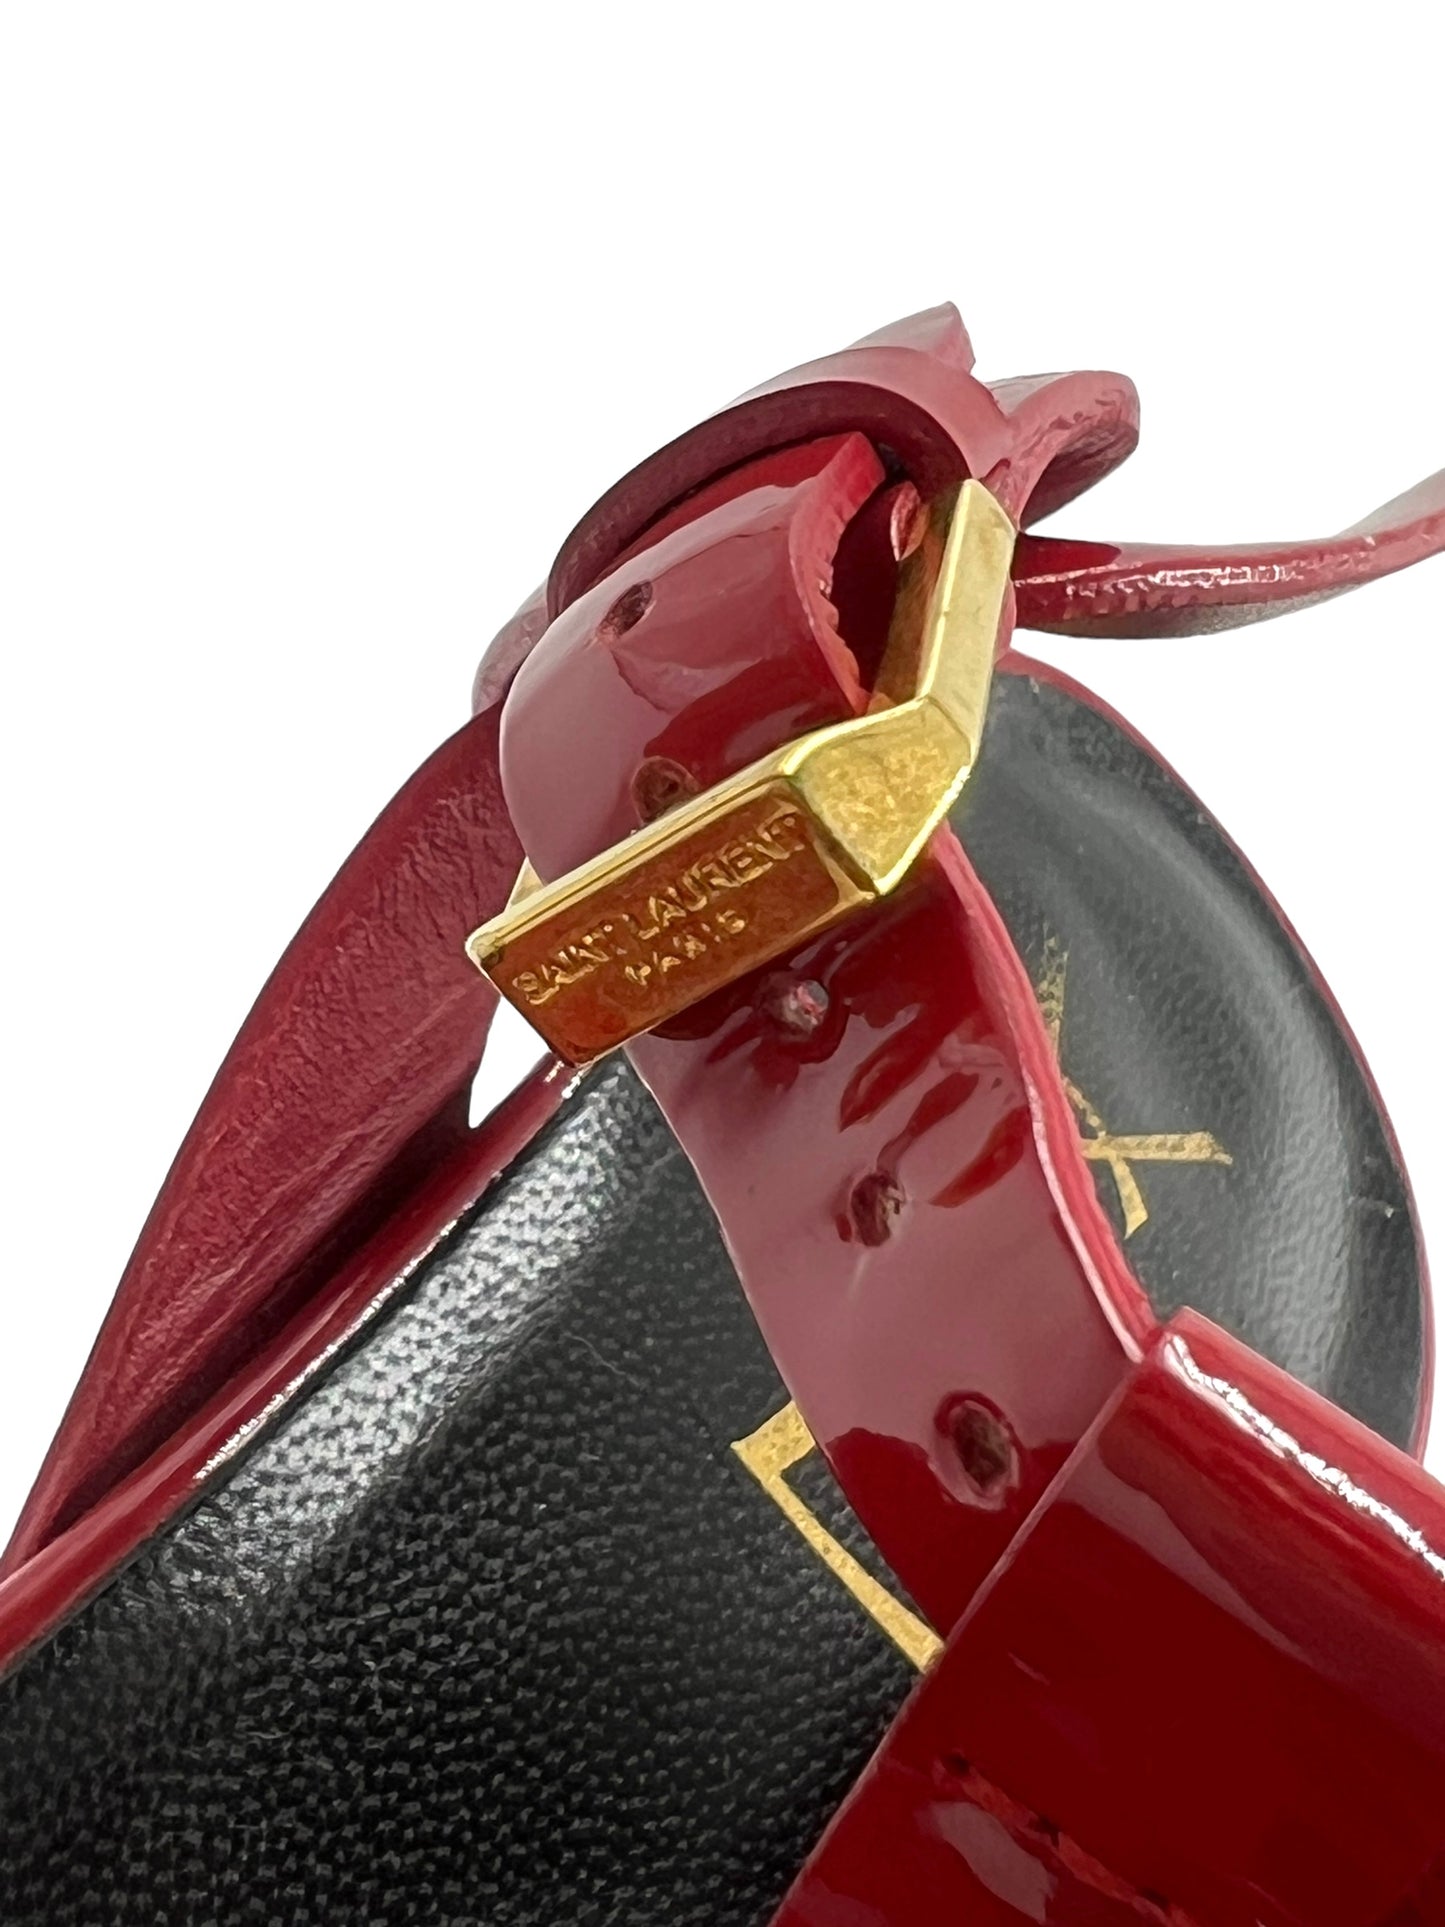 Saint Laurent YSL Red Patent Size 39.5 Tribute Heels